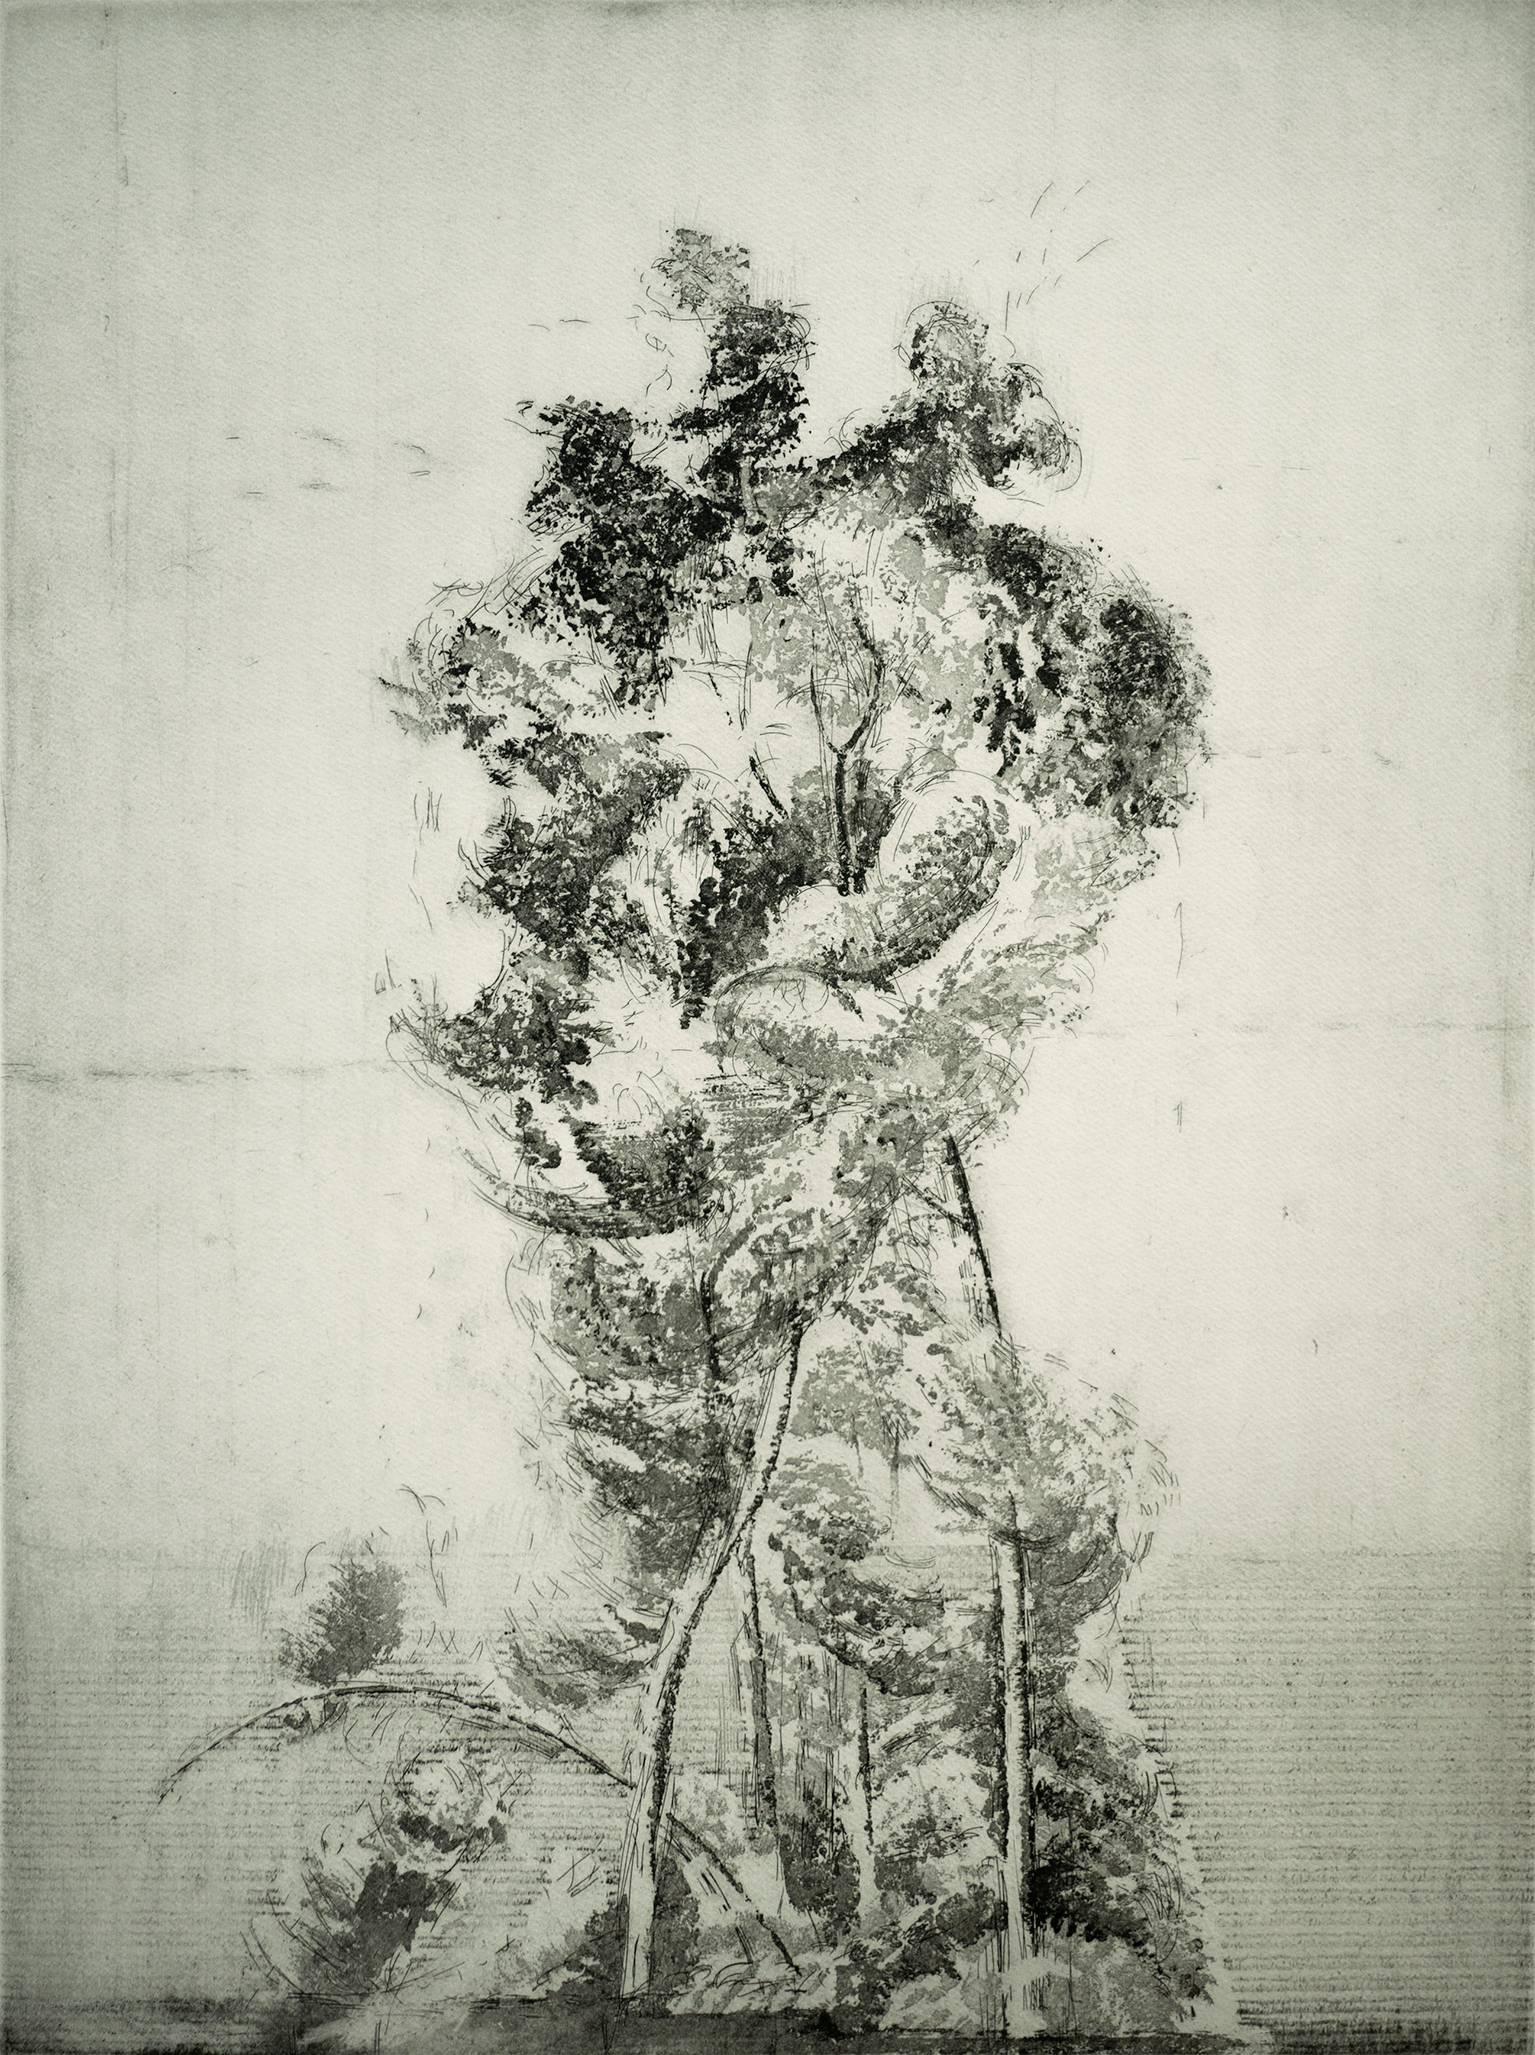 Eric Holzman Landscape Print - "Alberone", modernist landscape etching tree print, warm black and white.